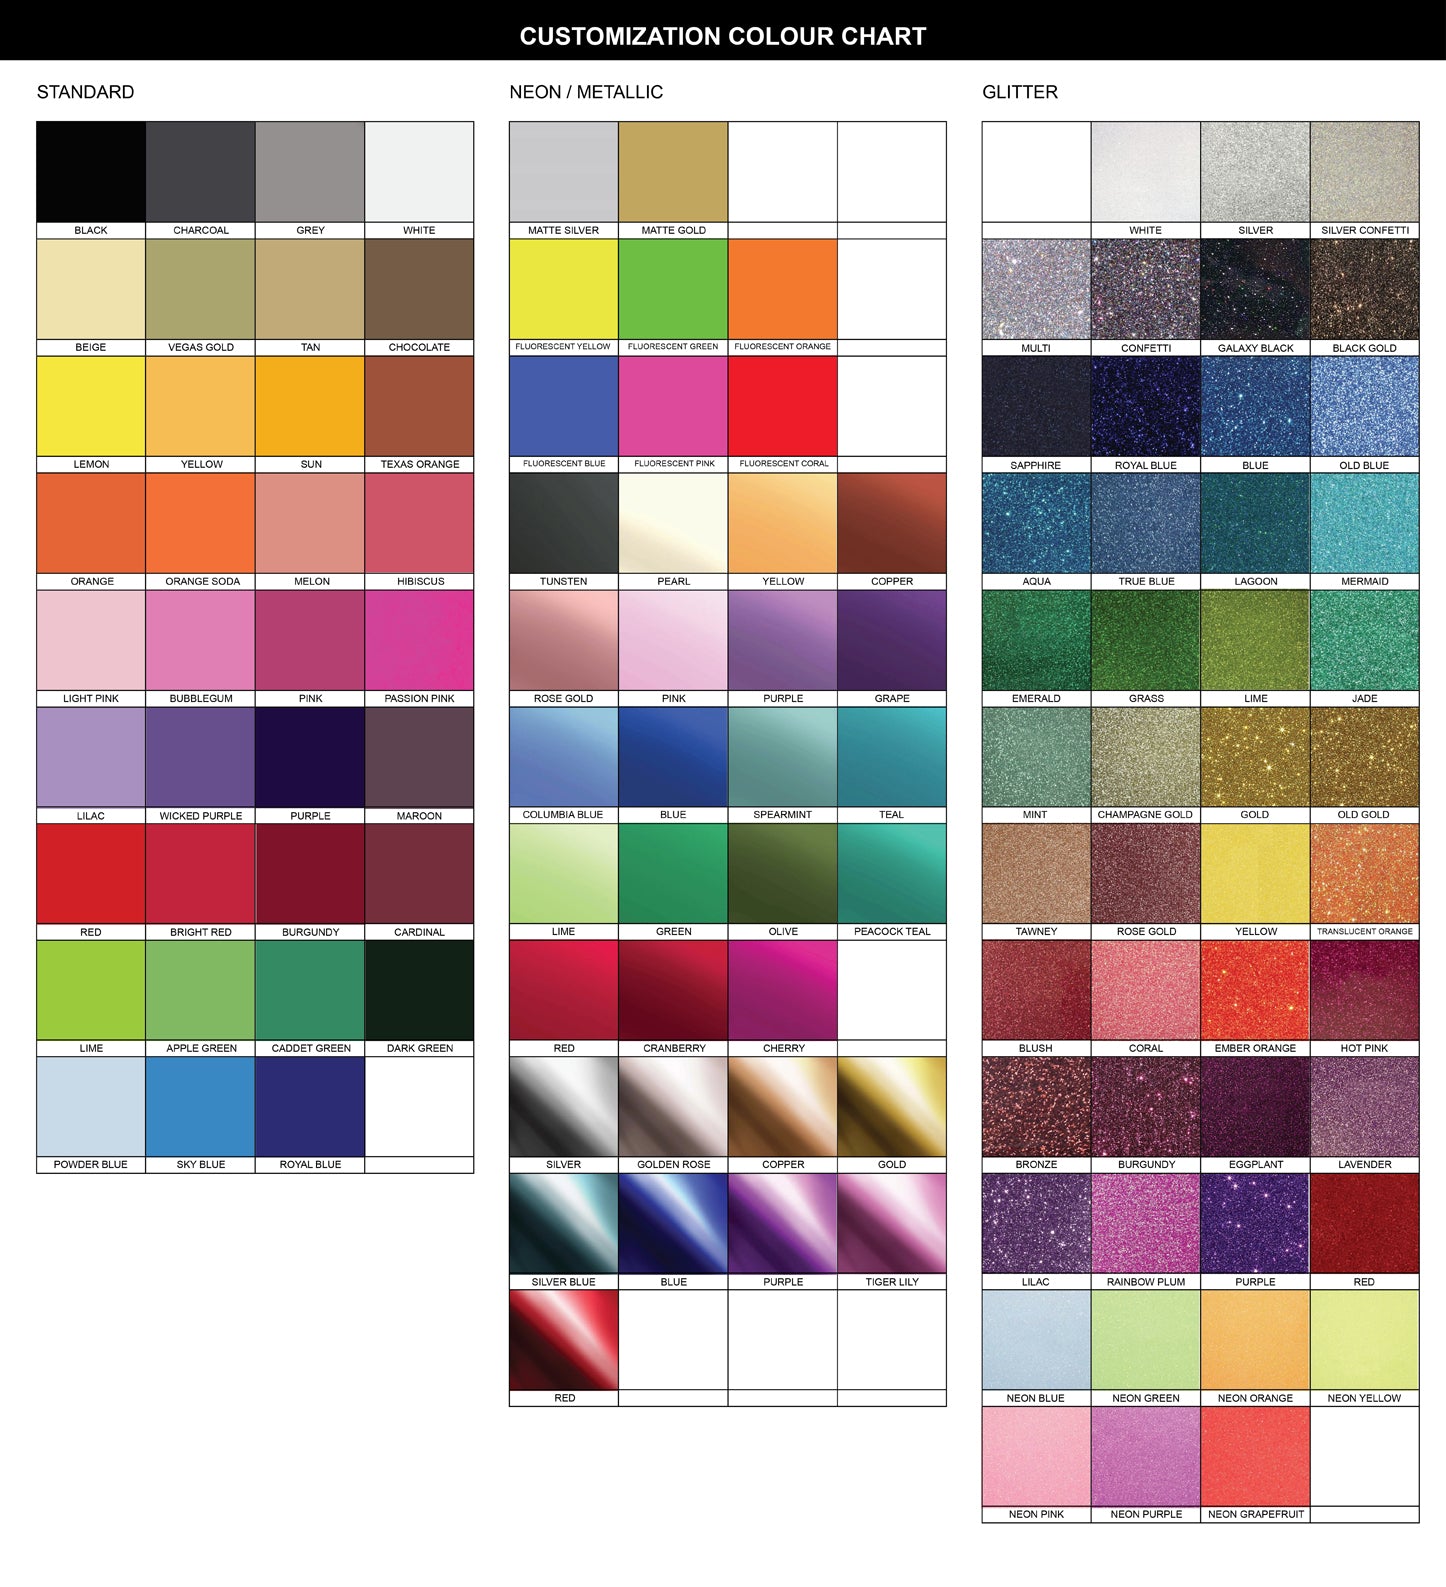 Customization color chart